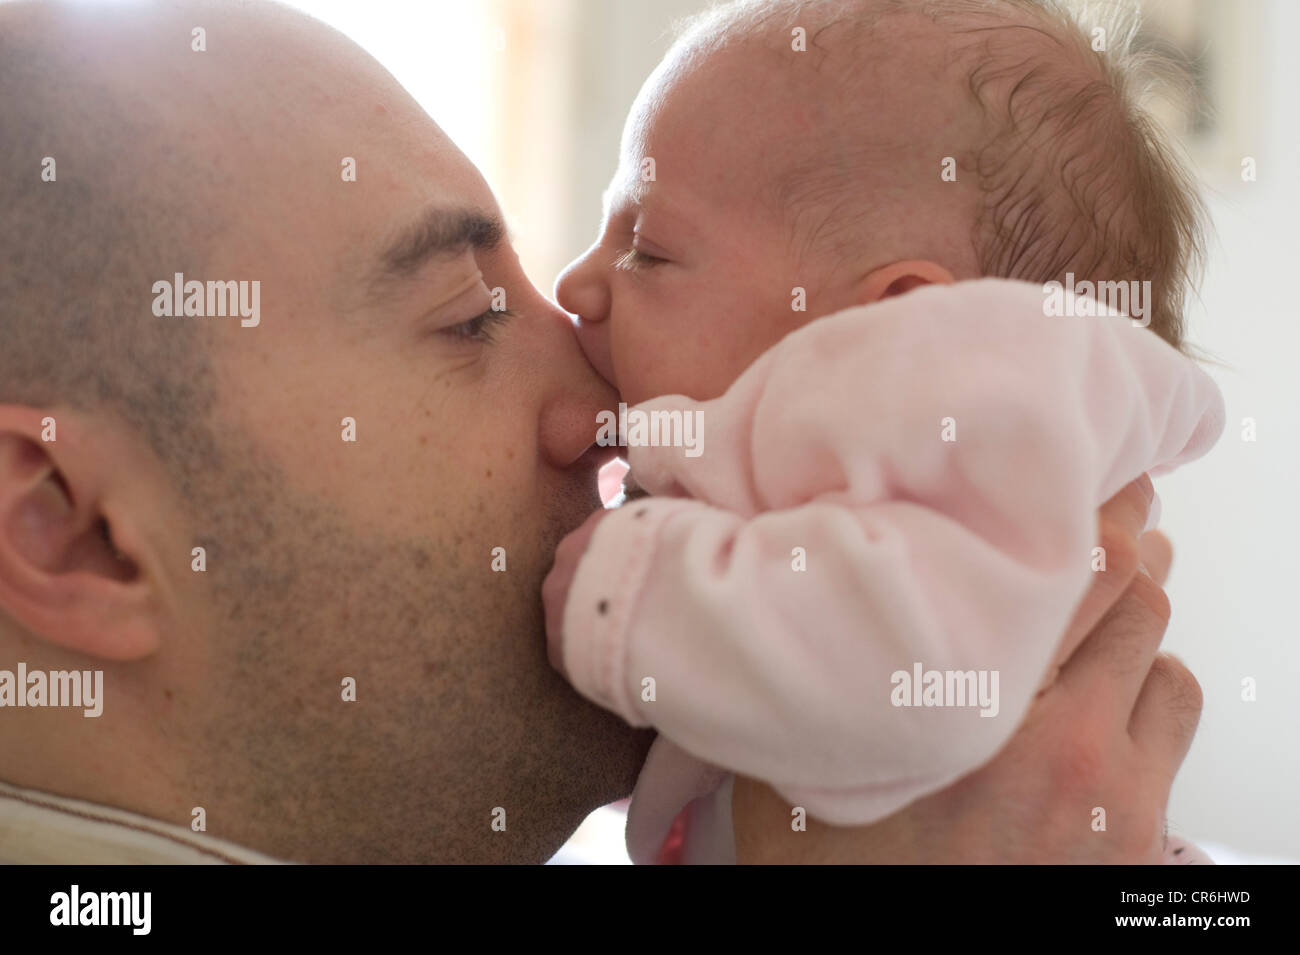 Vater und Kind küssen Nase Padre e Neonato Bacio Sul naso Stockfoto